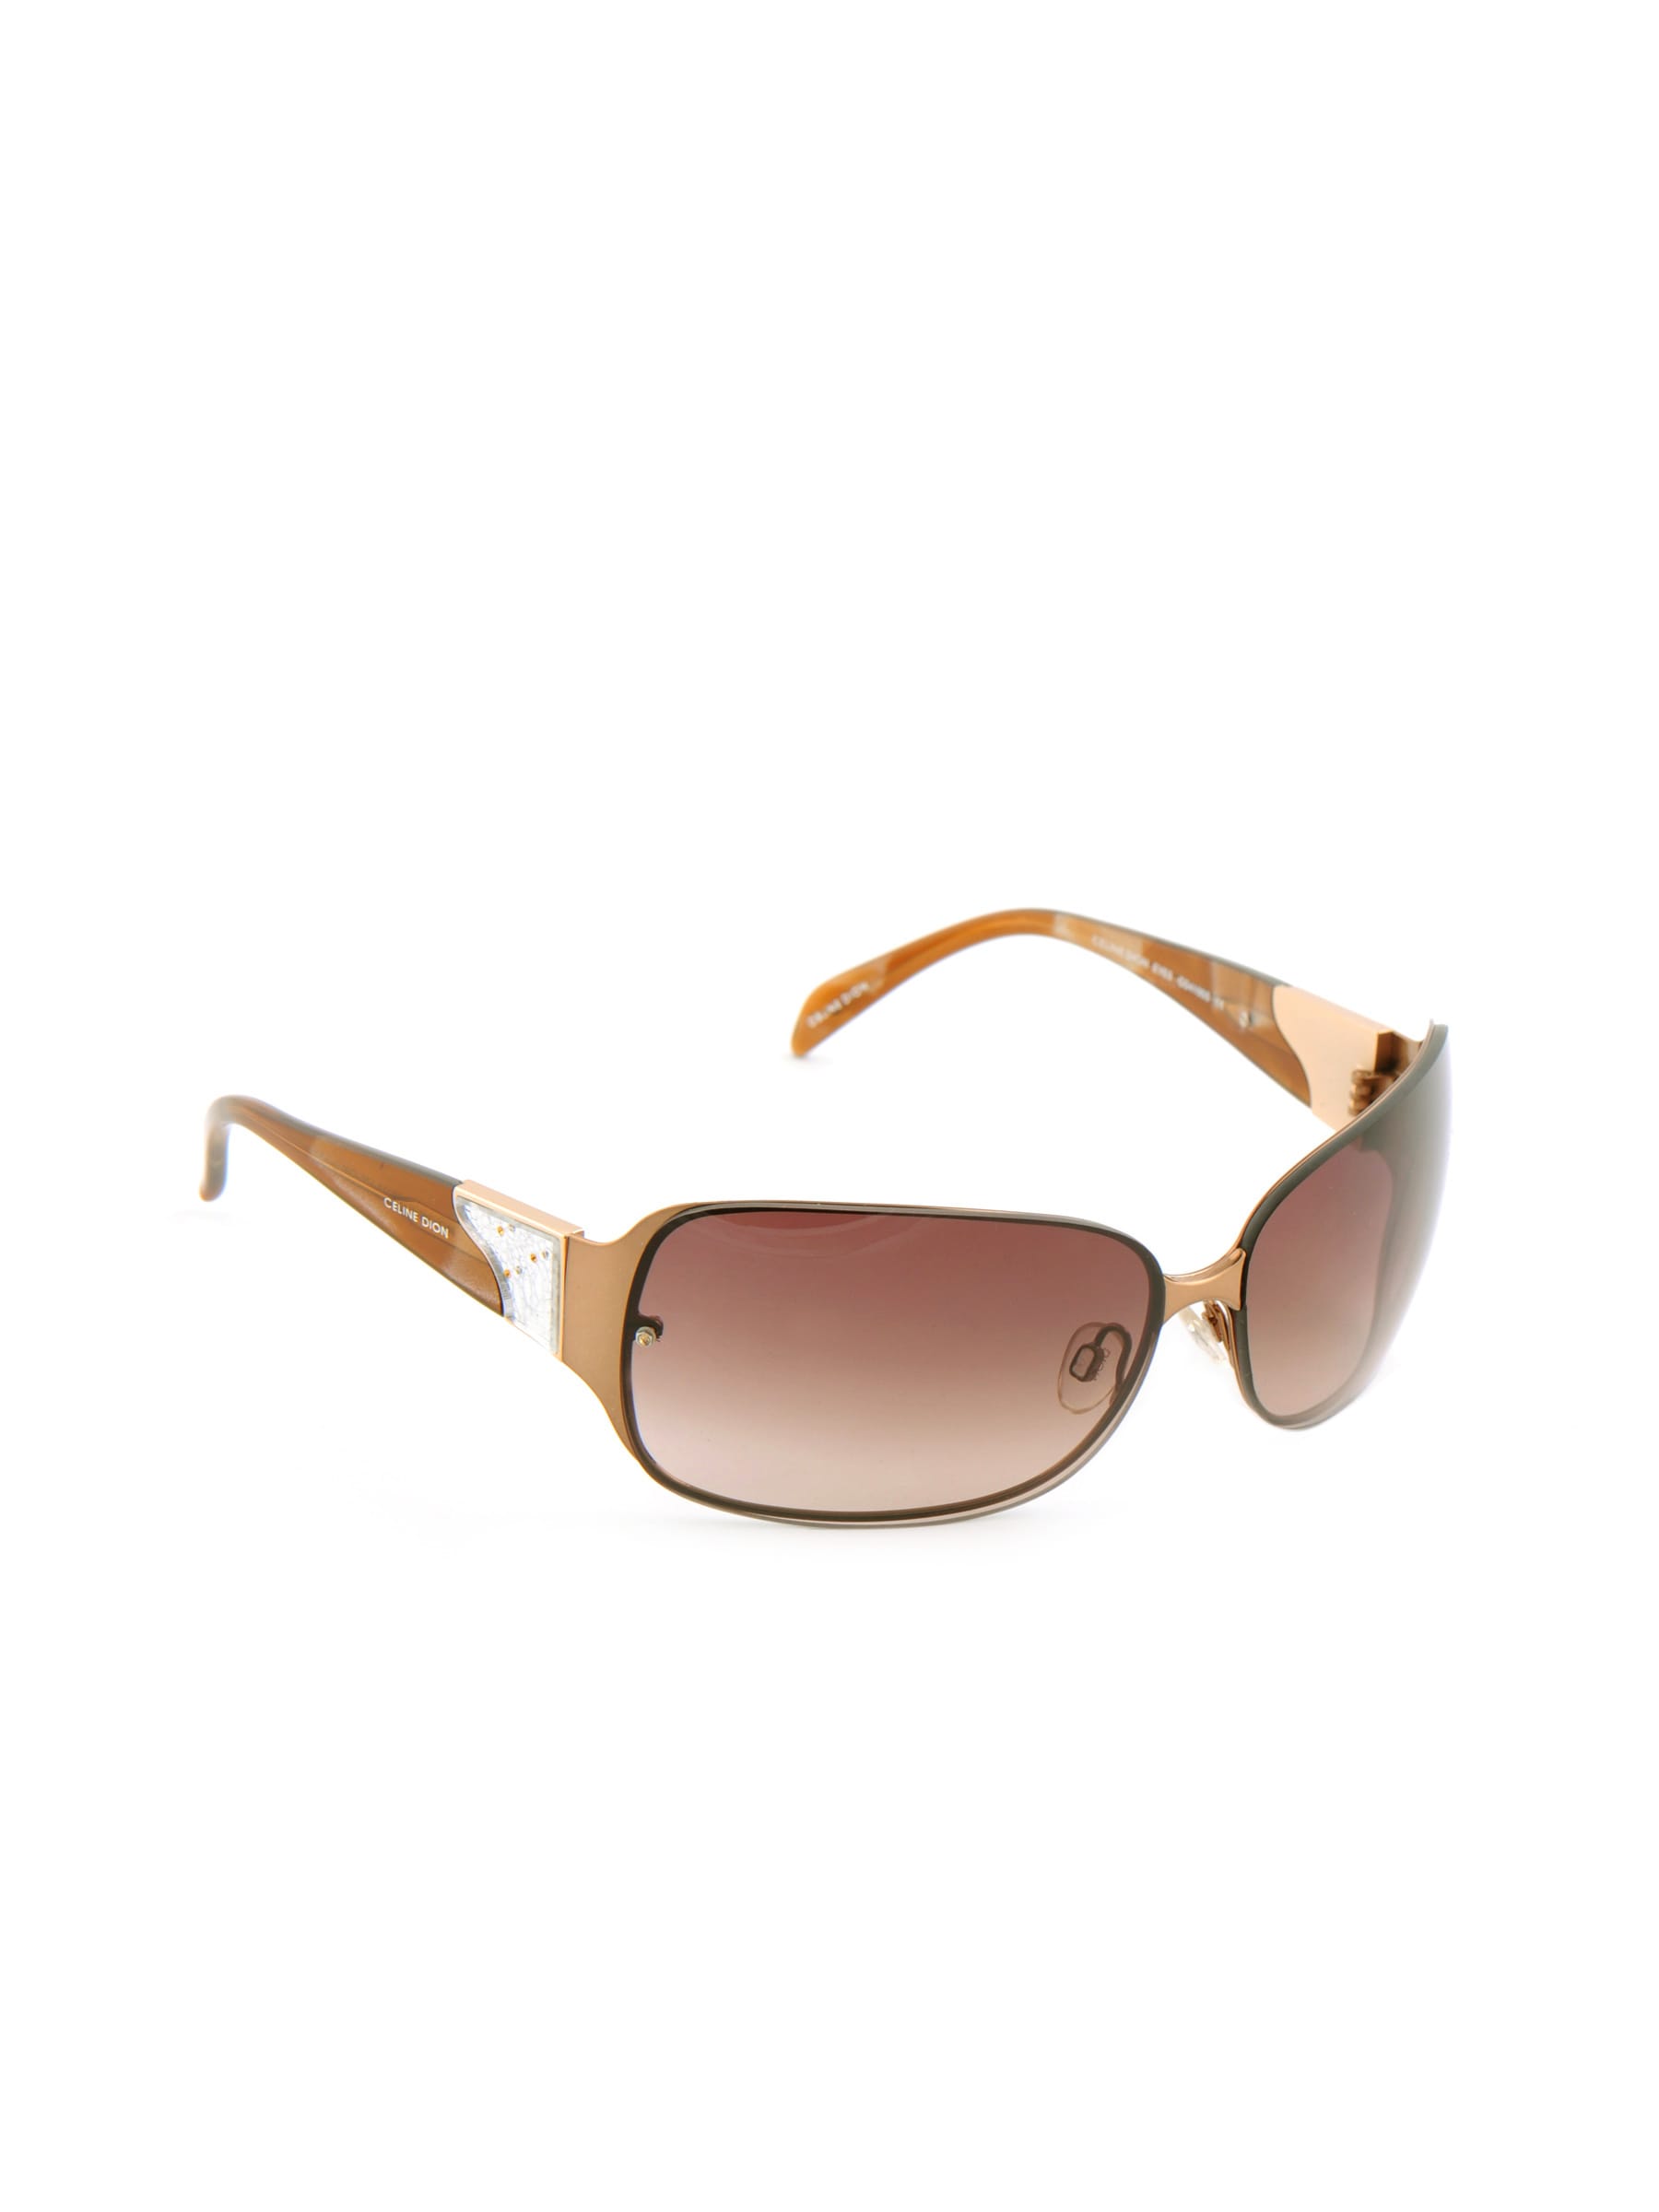 Celine Dion Women Copper Frame Sunglasses